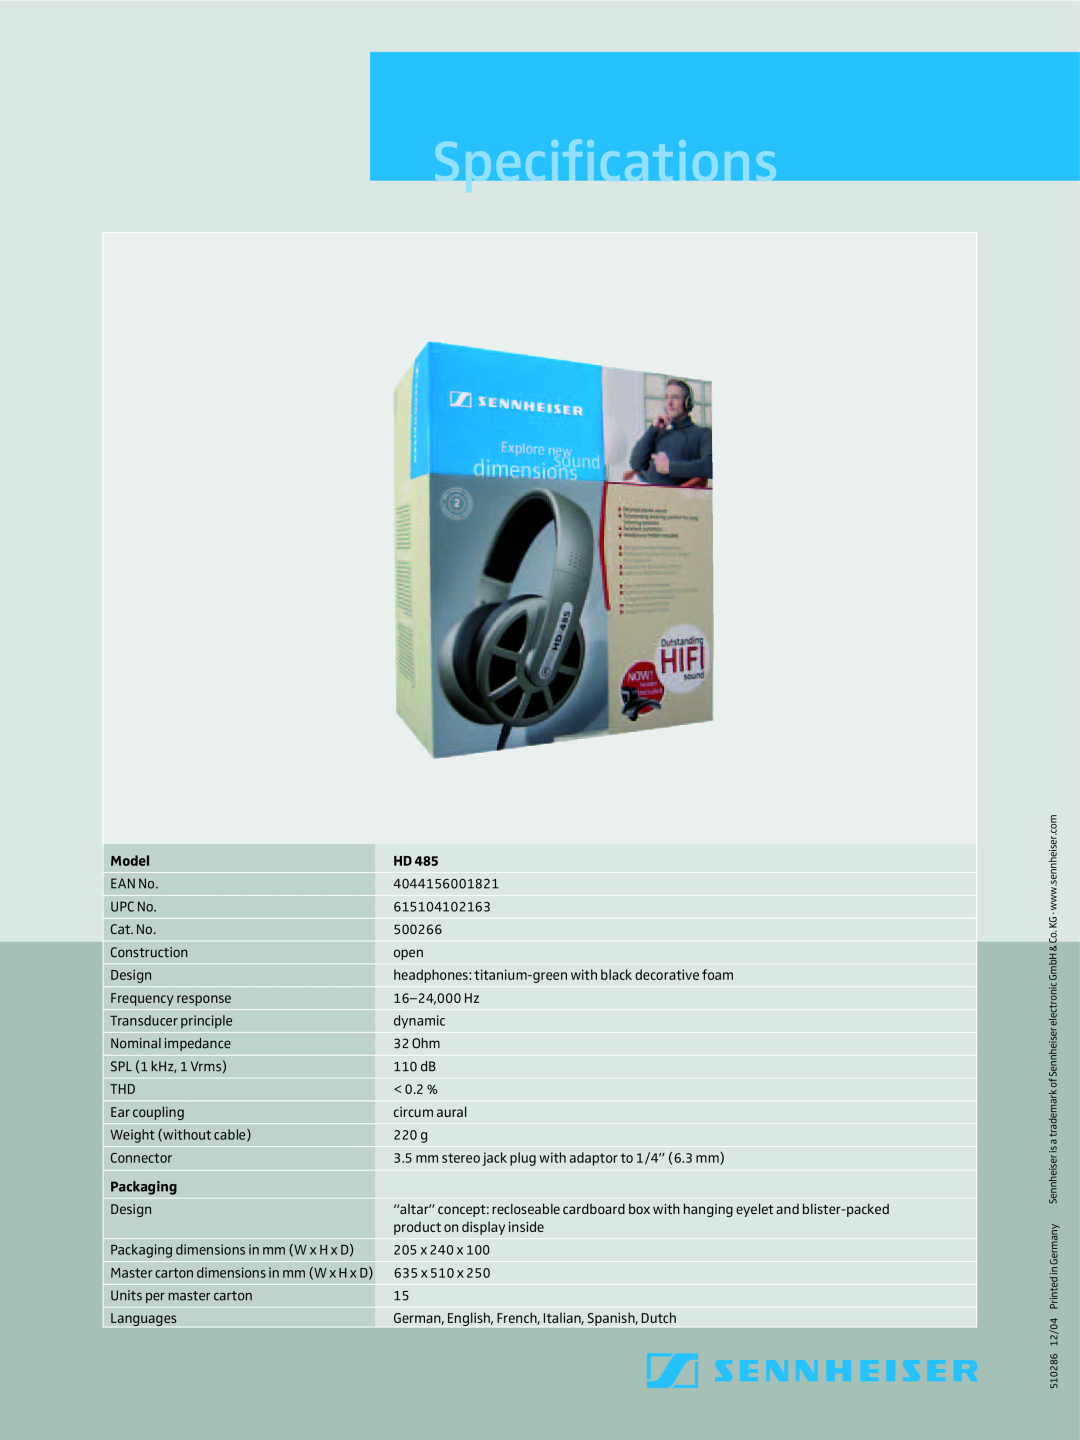 Sennheiser HD 465 dimensions Specifications, Model, HD485, Packaging 